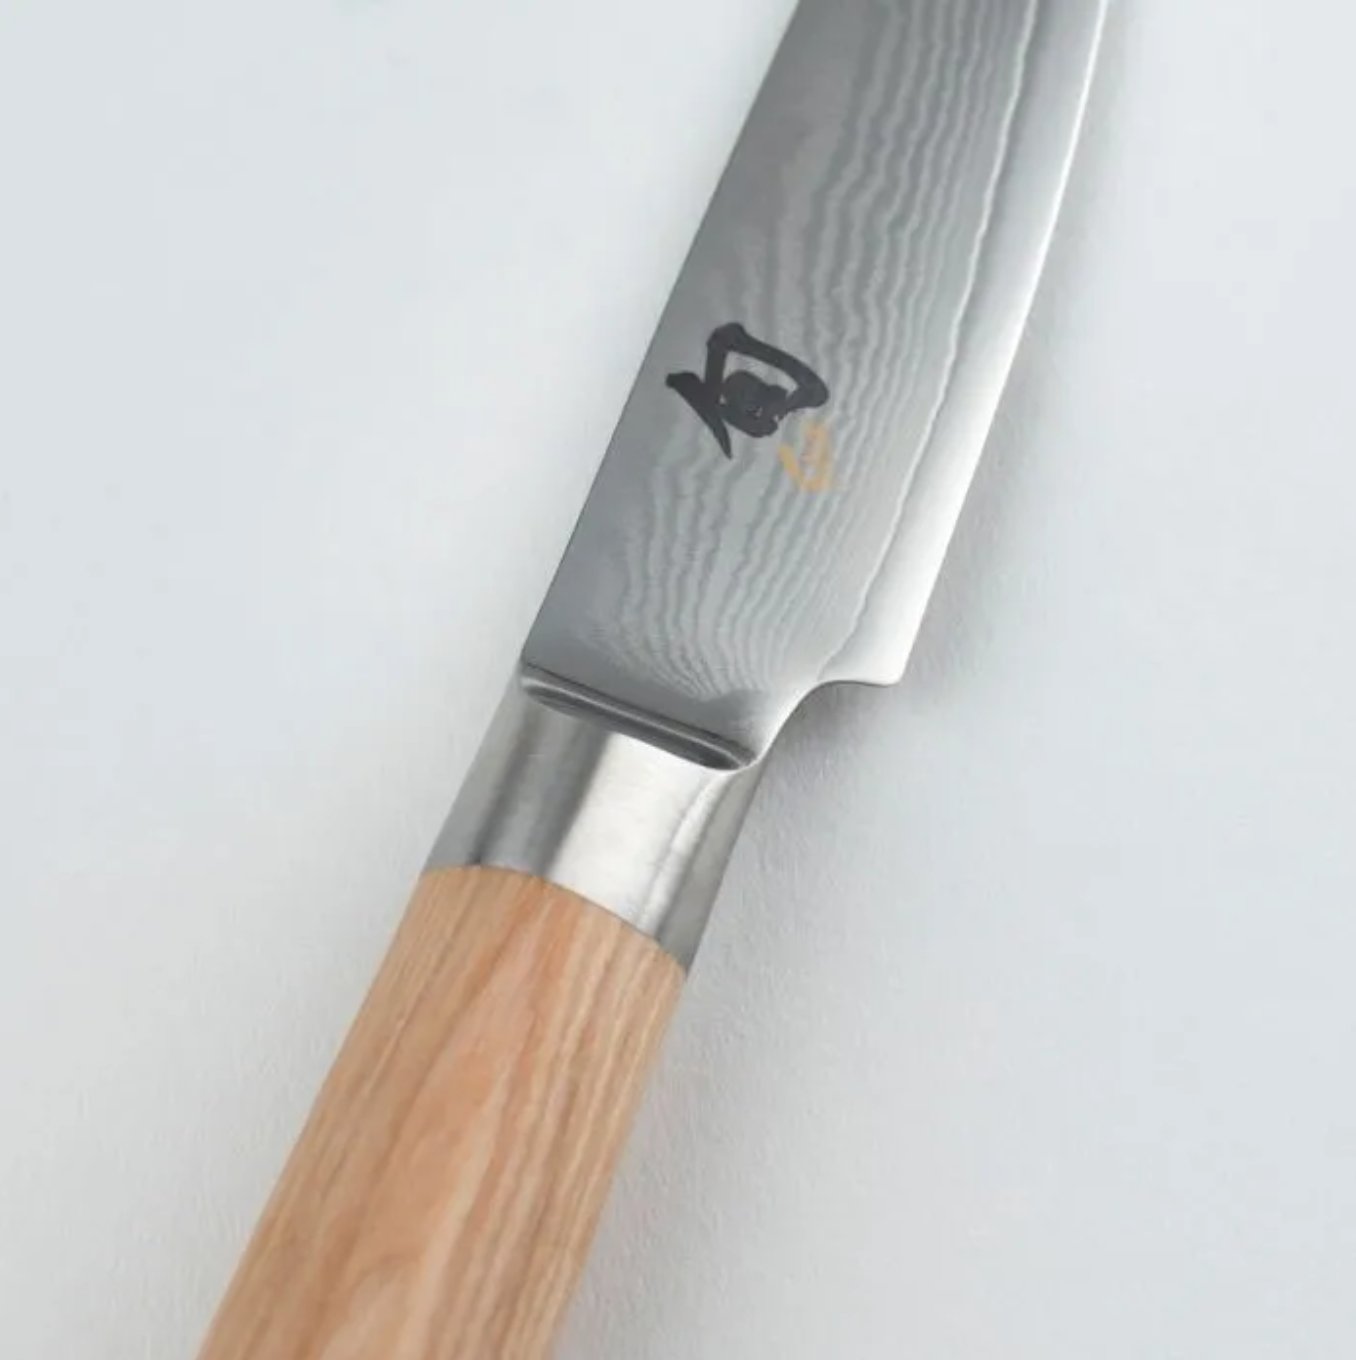 Shun Classic 3.5 inch Paring Knife